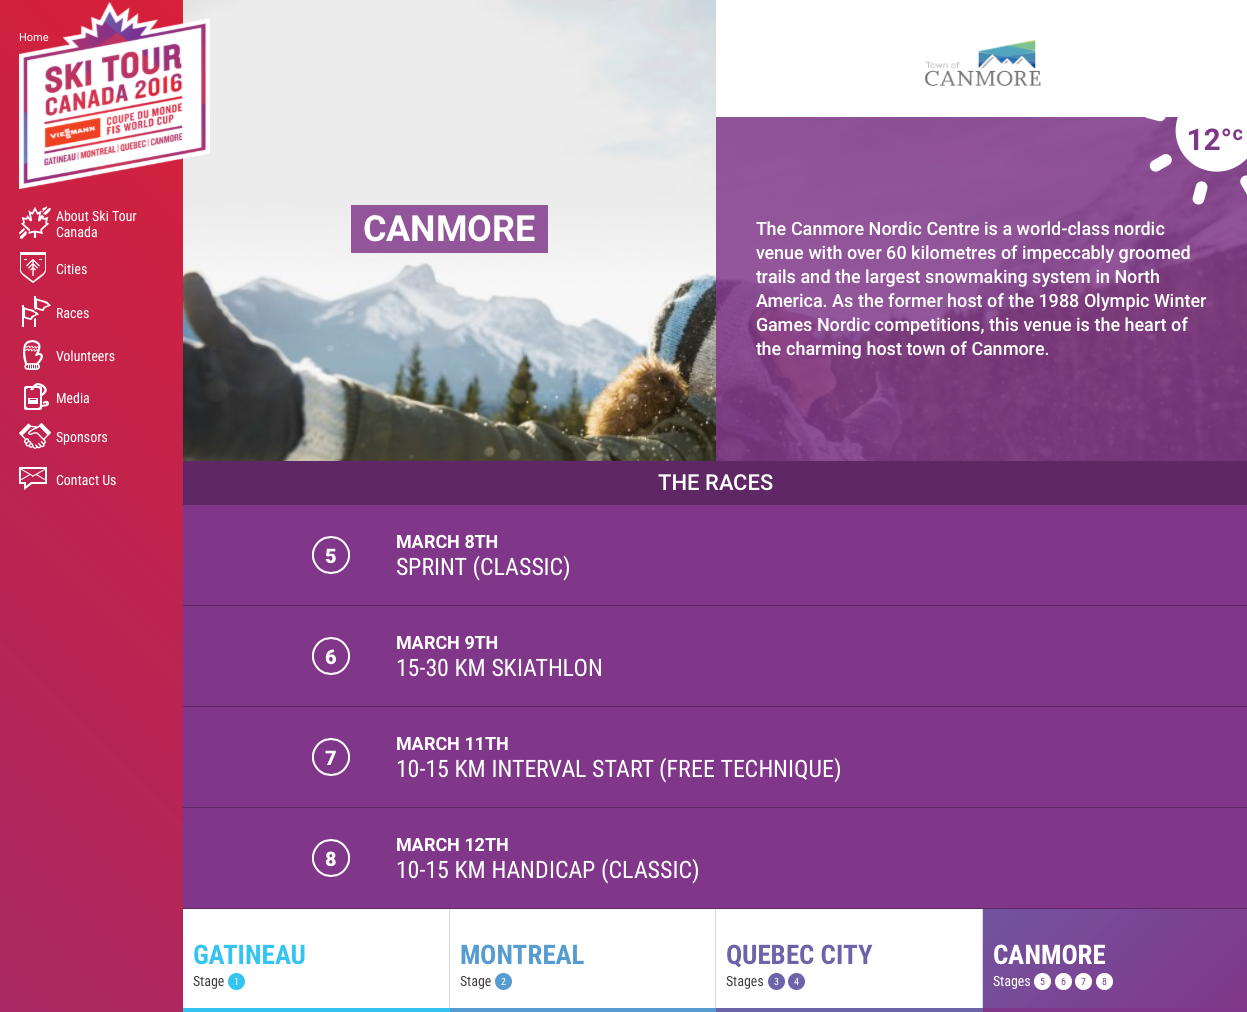 Ski Tour Canada 2016 unveils its website!